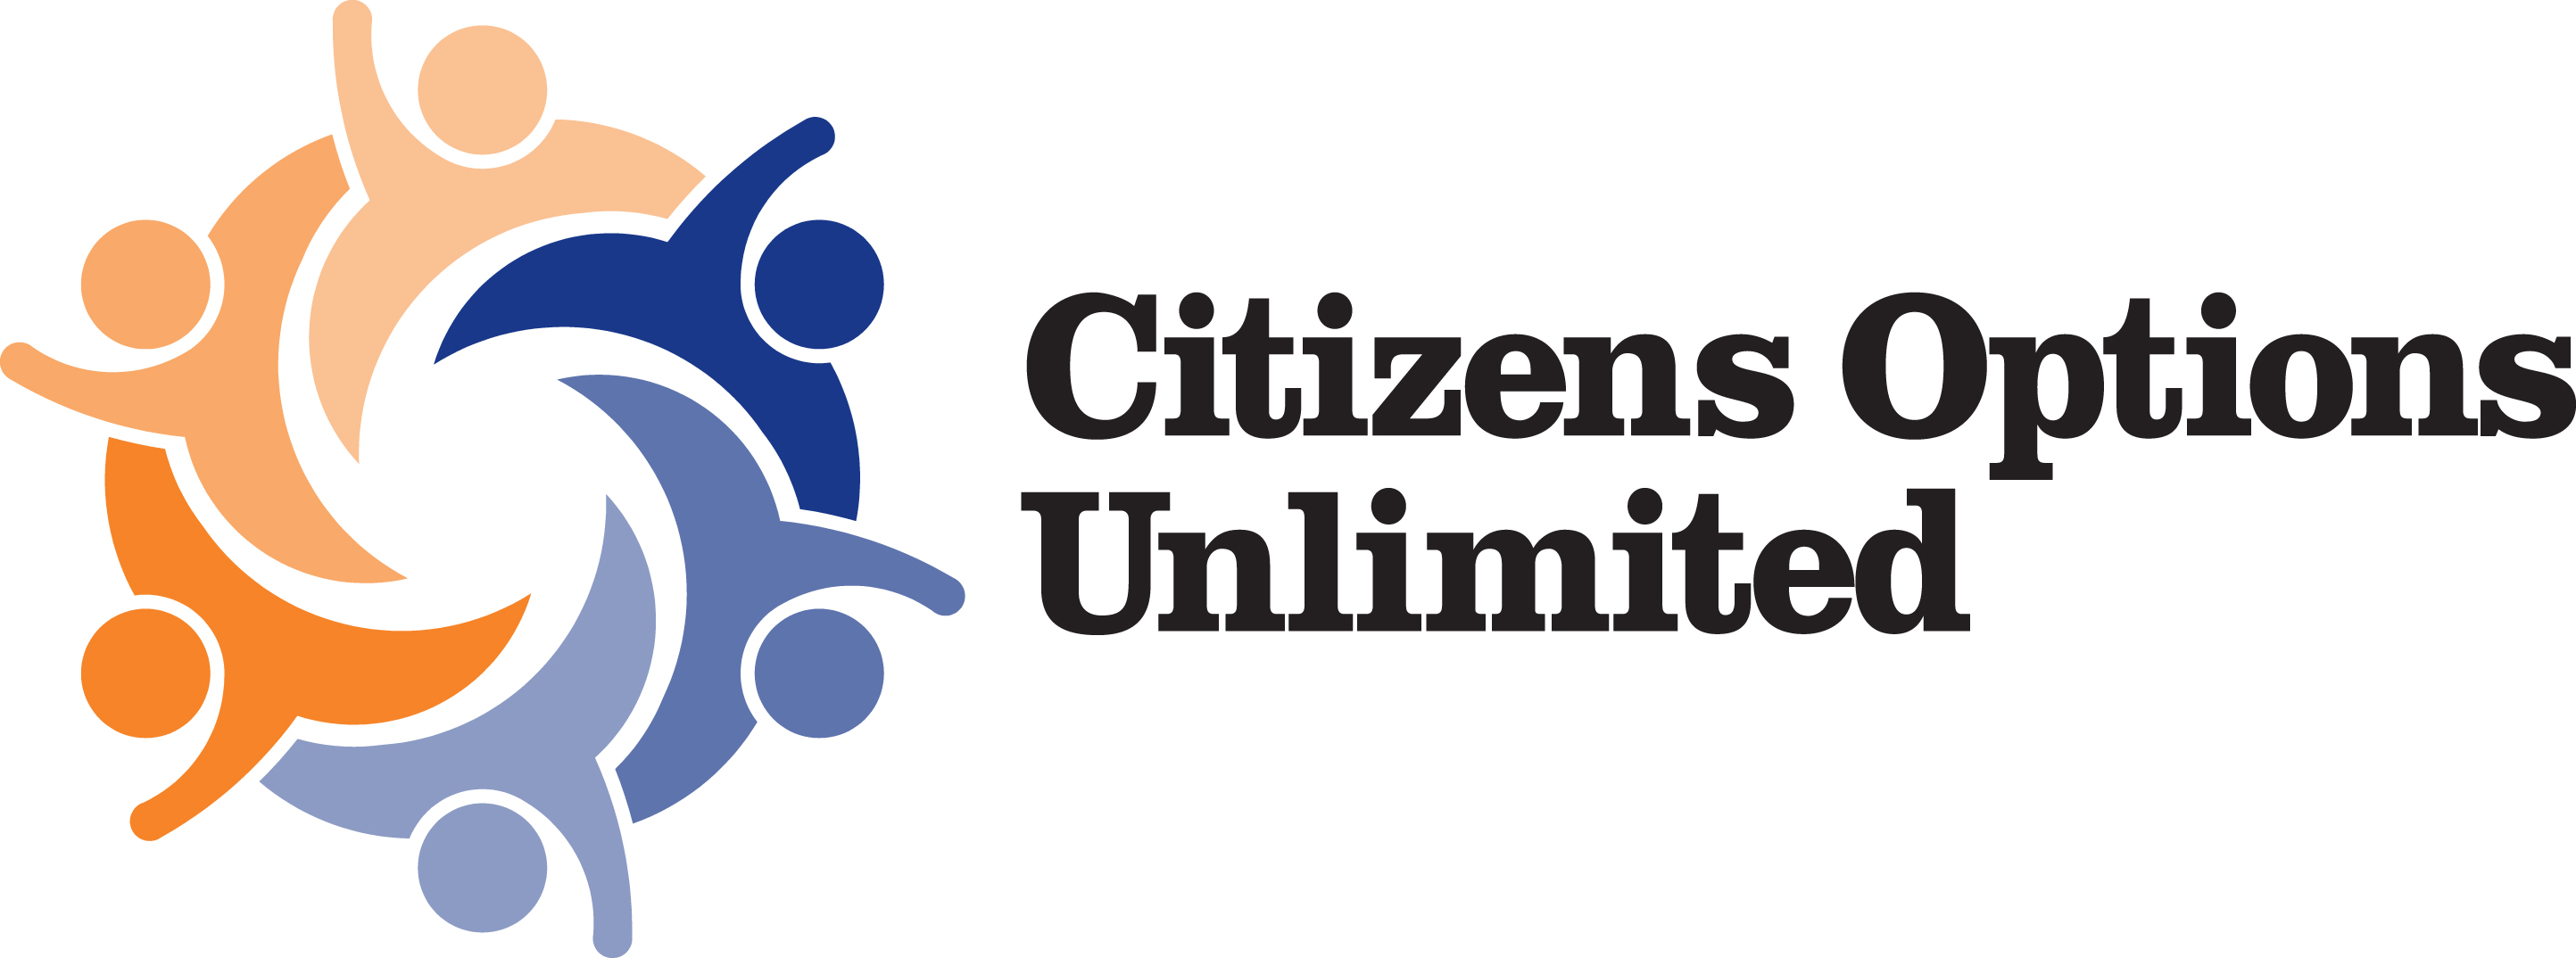 Citizens Options Unlimited Logo.jpg